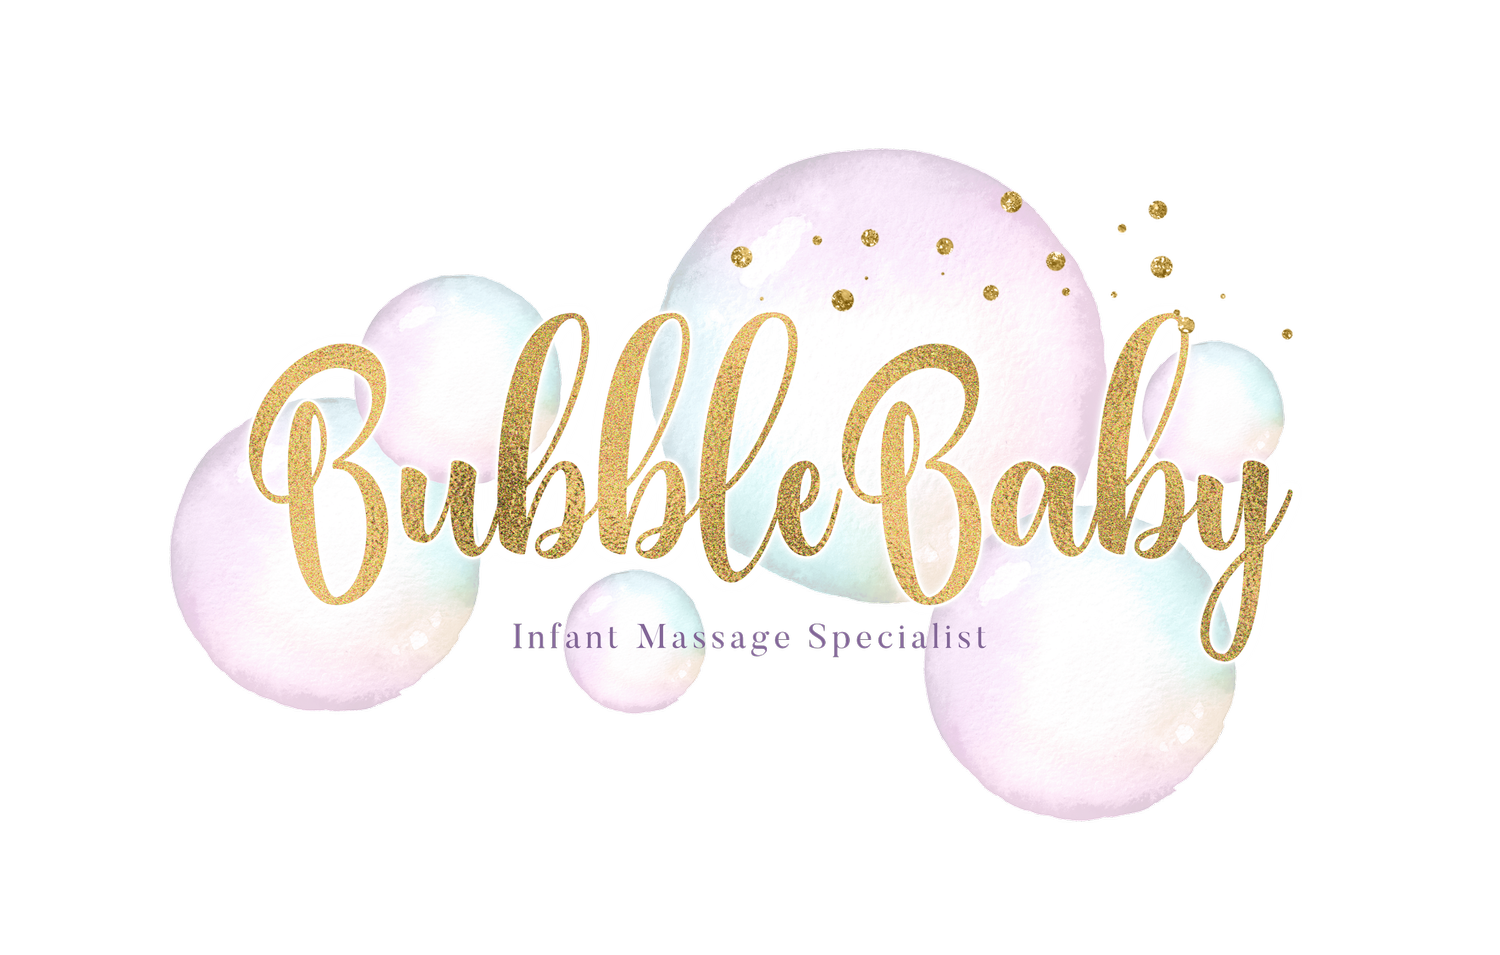 BubbleBaby Infant Massage